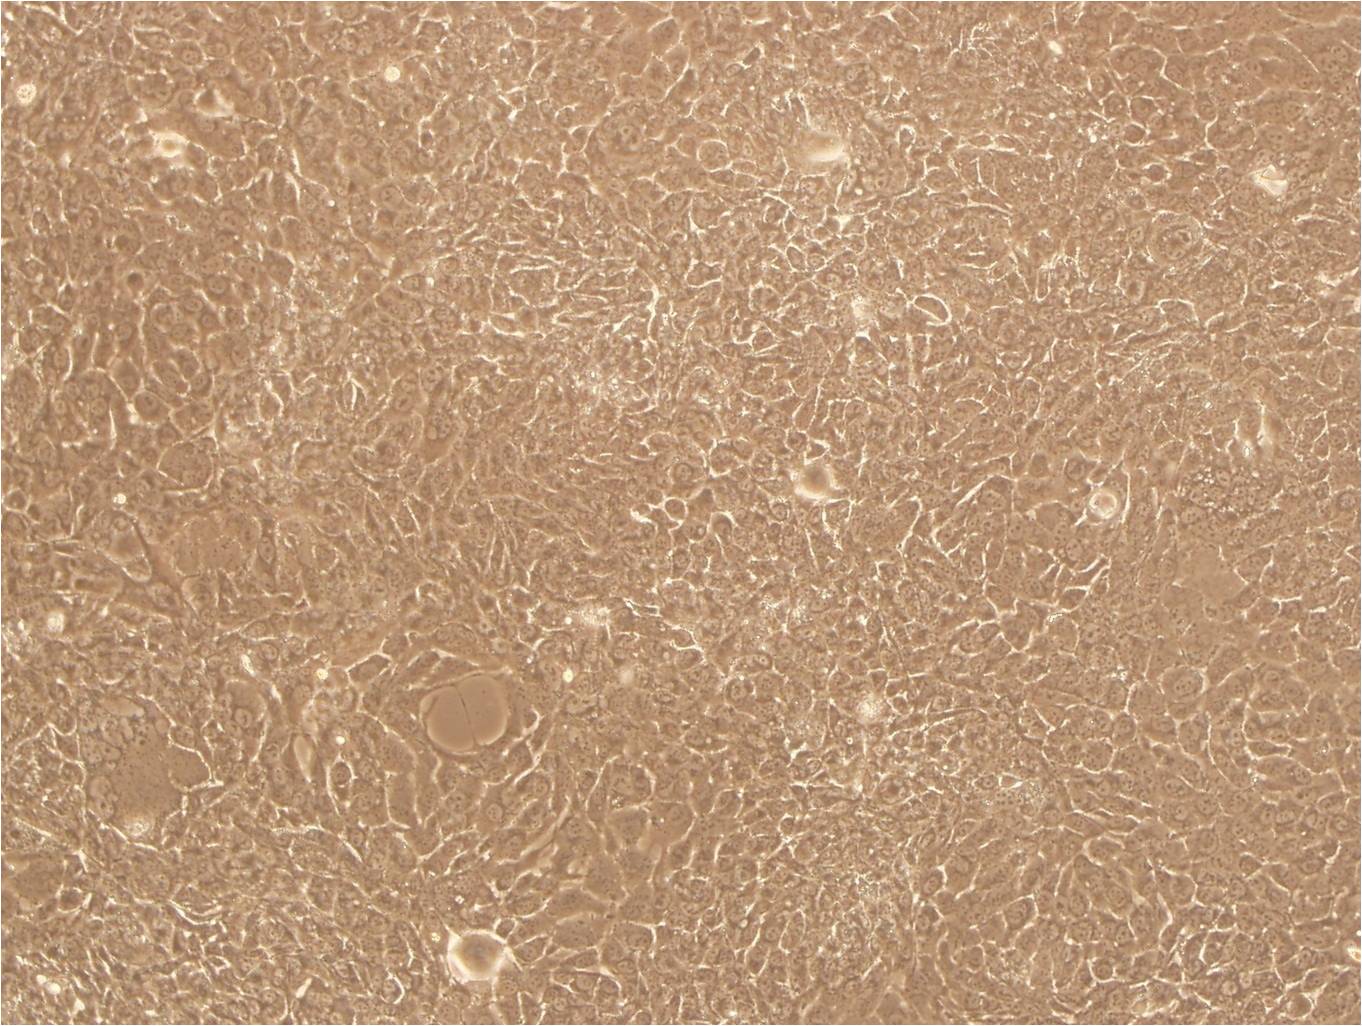 Pt K1 Cells(赠送Str鉴定报告)|袋鼠肾细胞